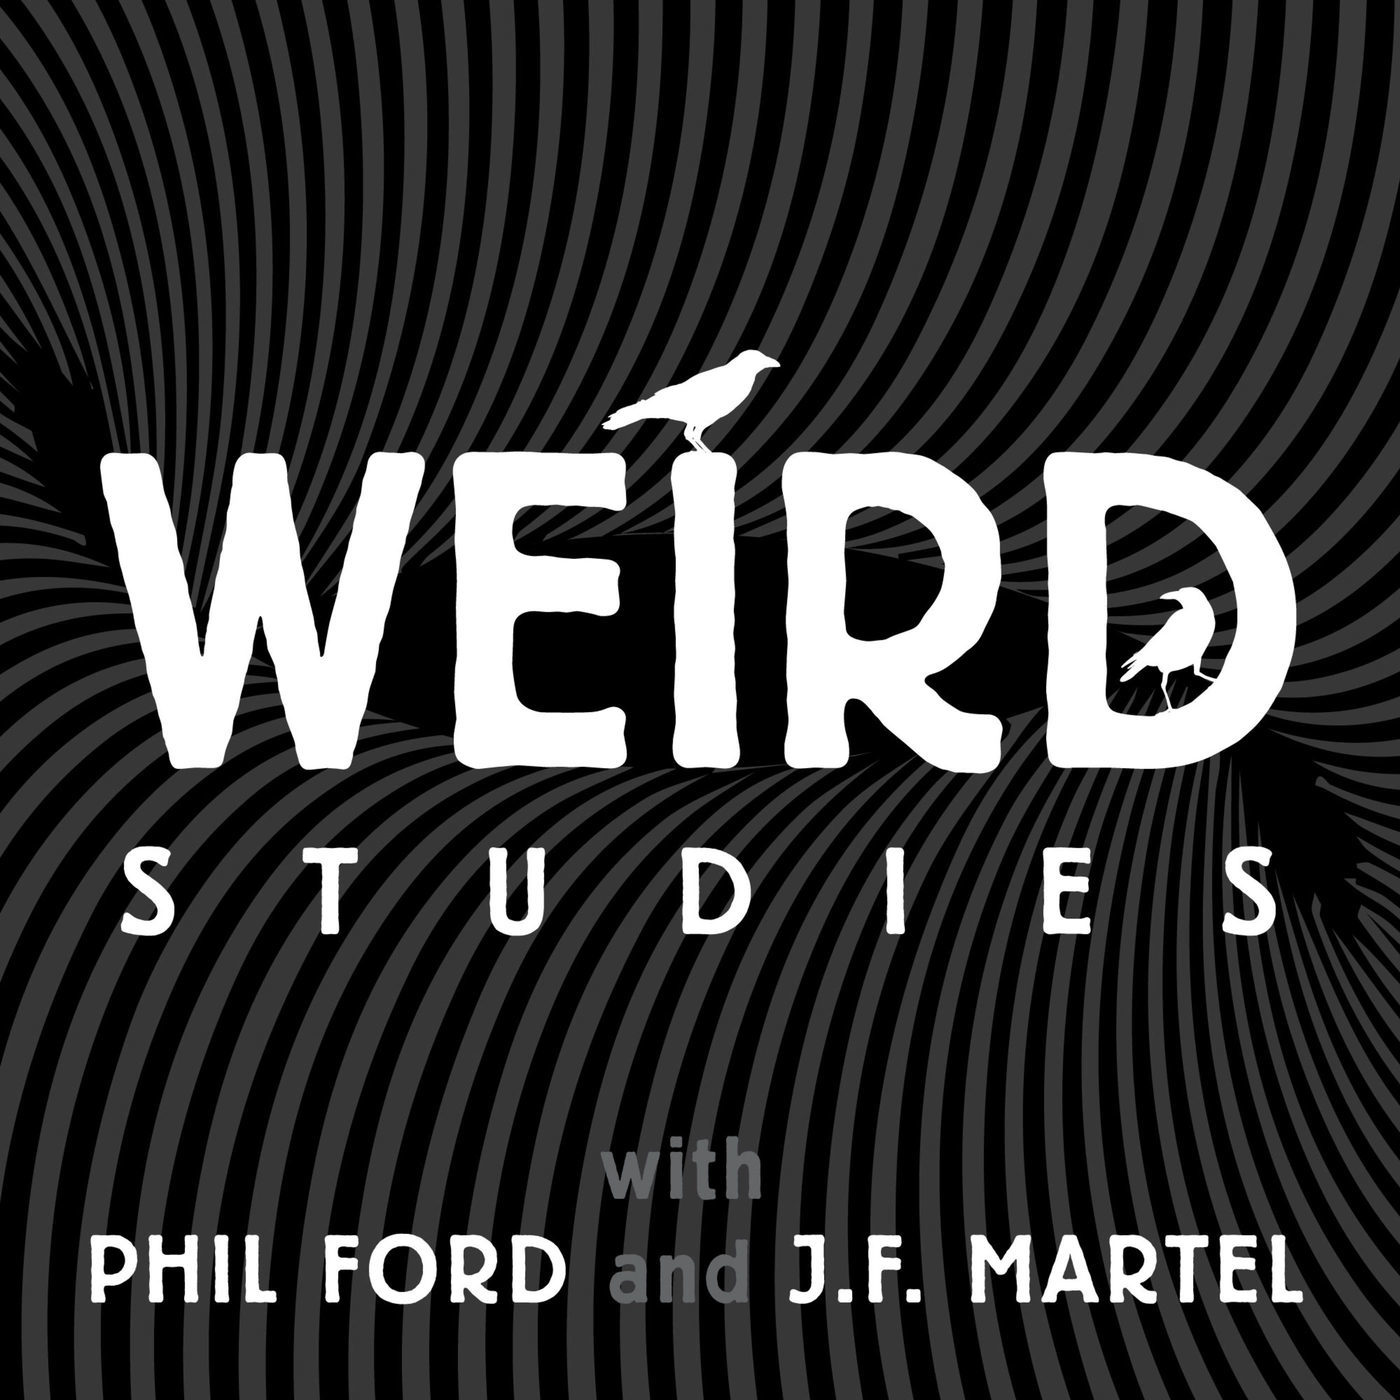 www.weirdstudies.com